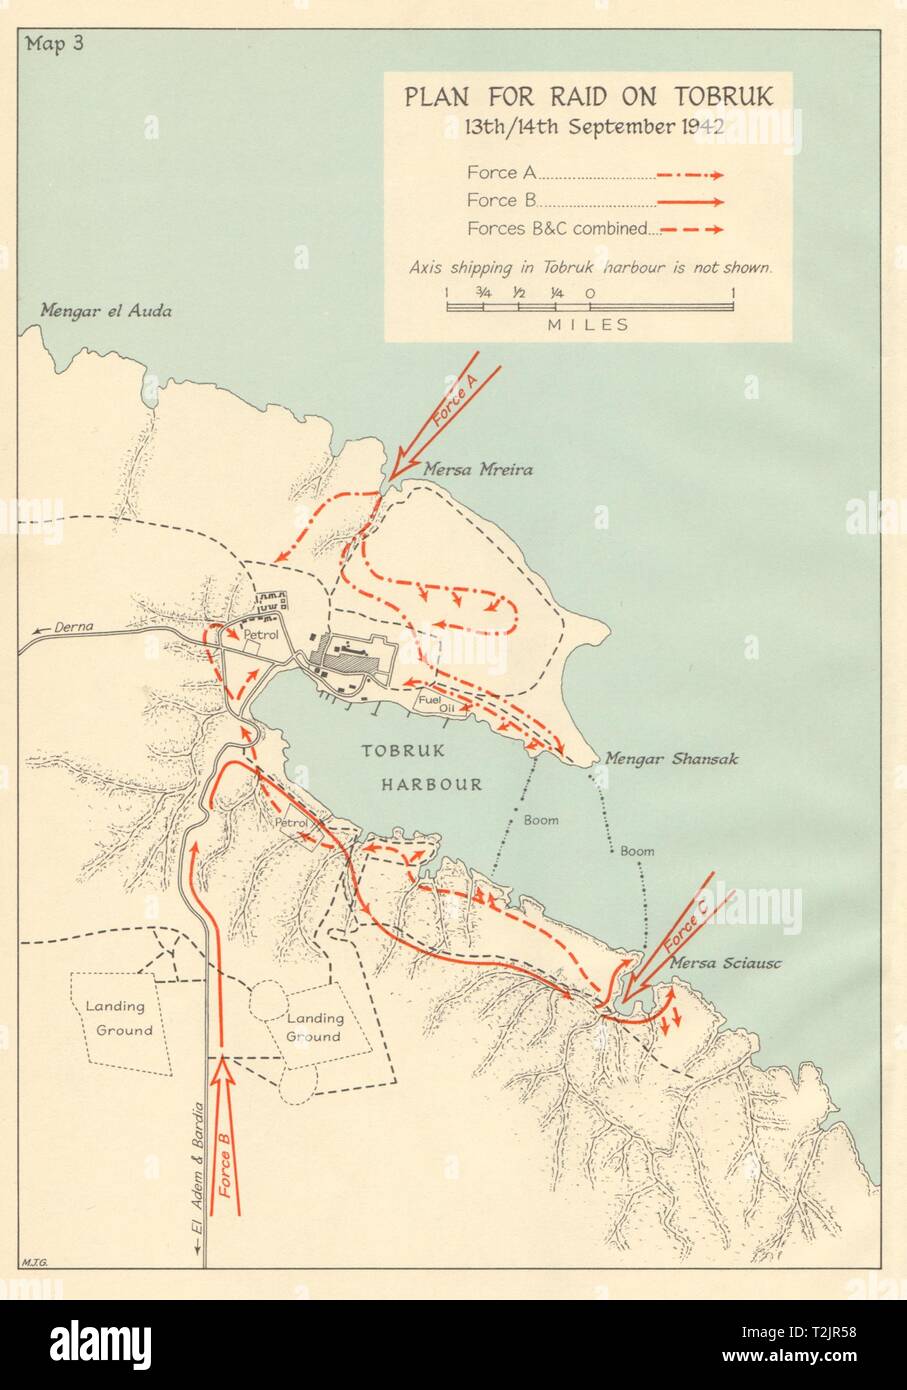 Auf Tobruk, 13./14. September 1942 Raid. Weltkrieg 2. Libyen Nordafrika 1966 Karte Stockfoto